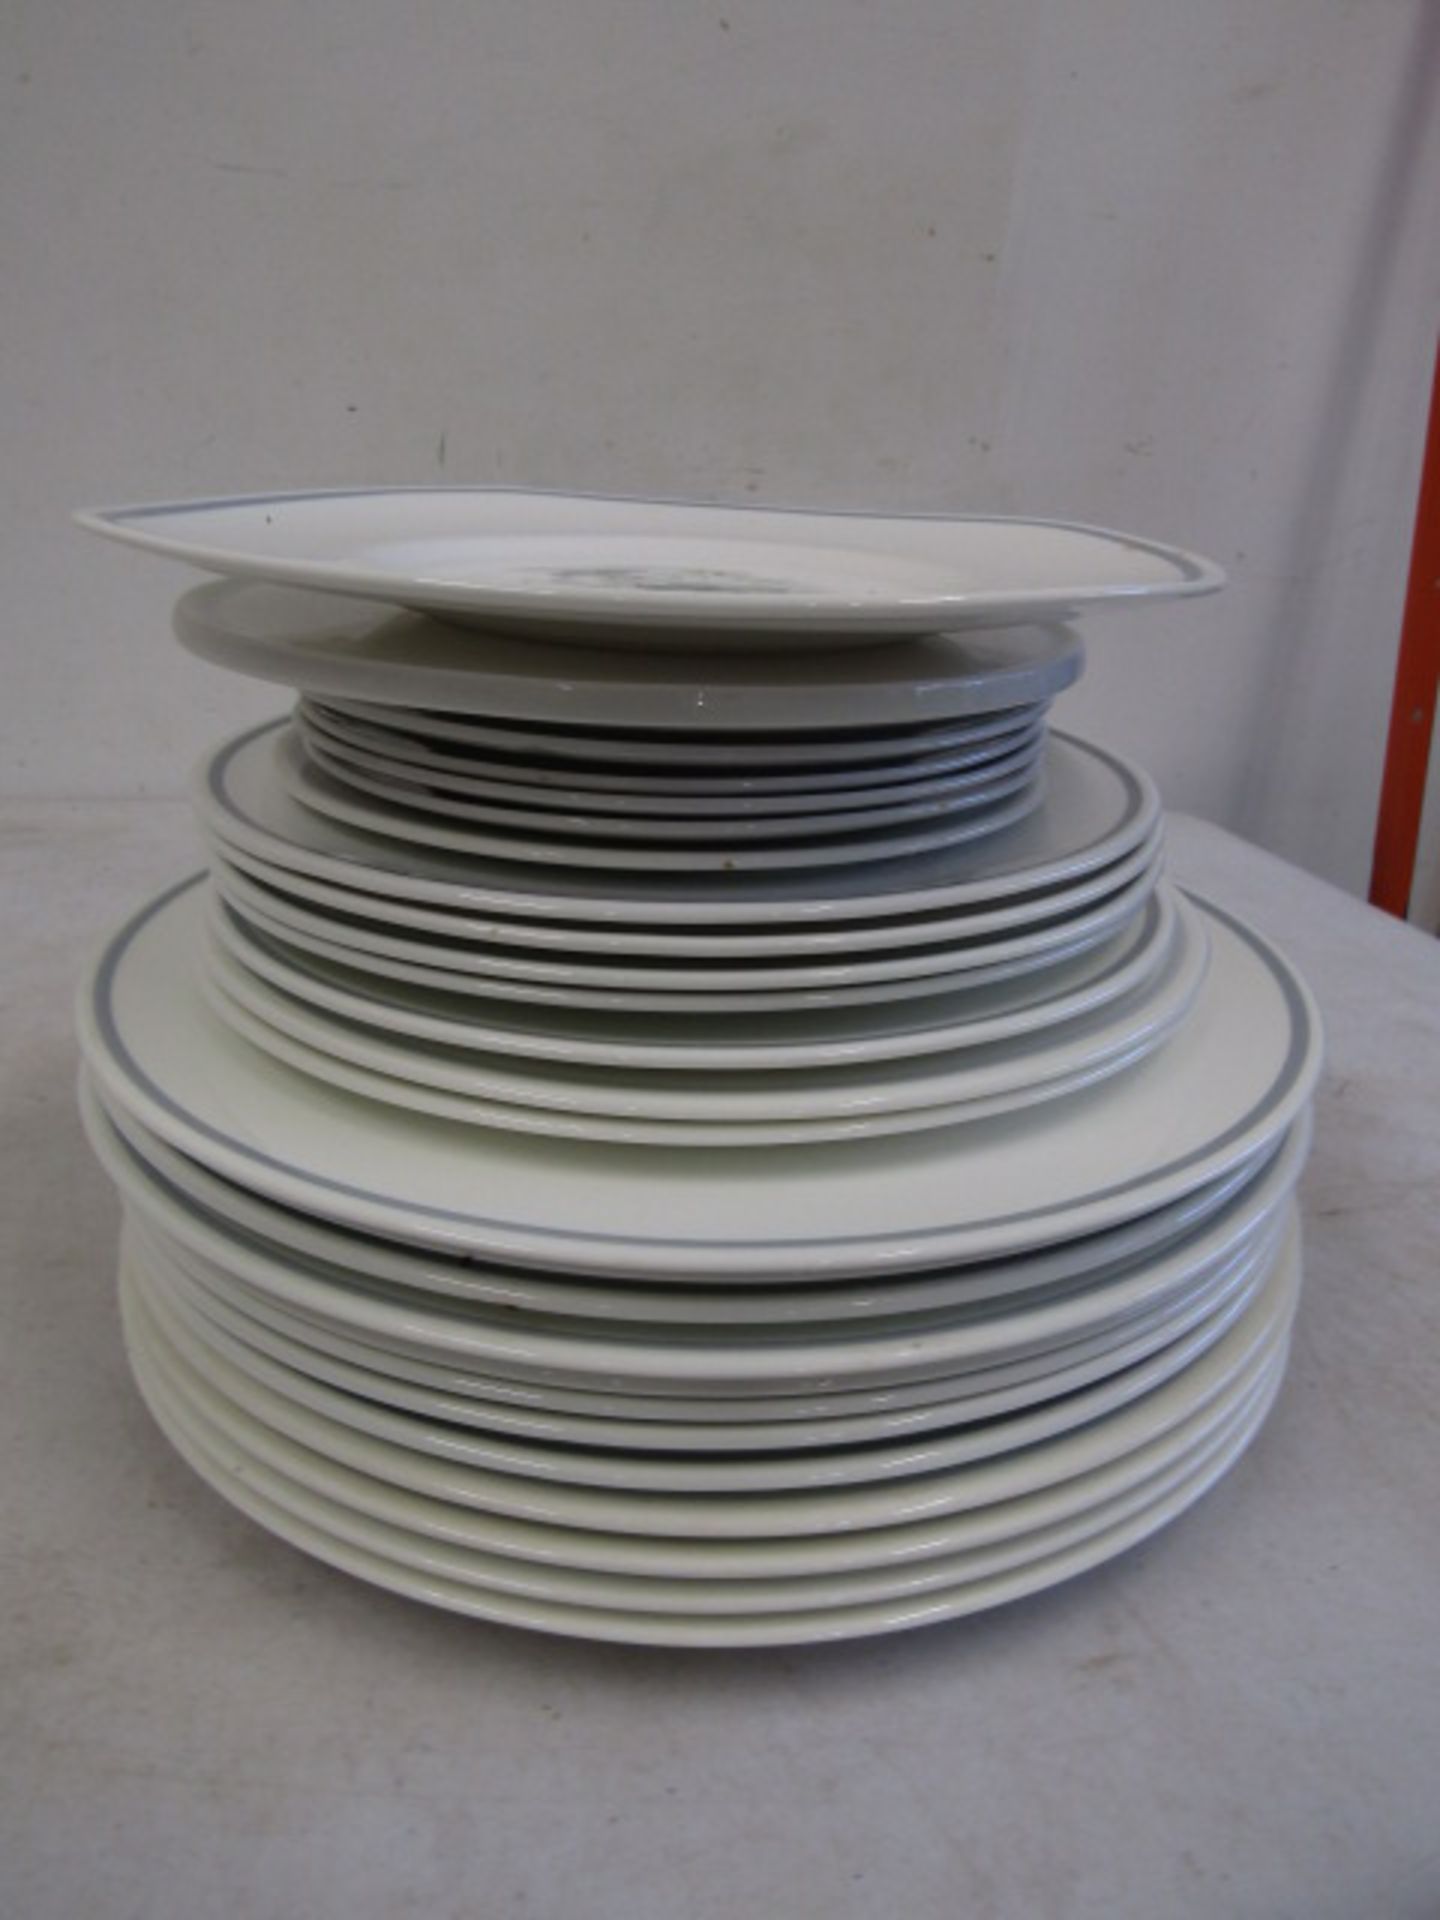 Susie Cooper 'Glen Mist' for Wedgwood part dinner service comprising 12 dinner plates, 7 side plates - Image 4 of 7